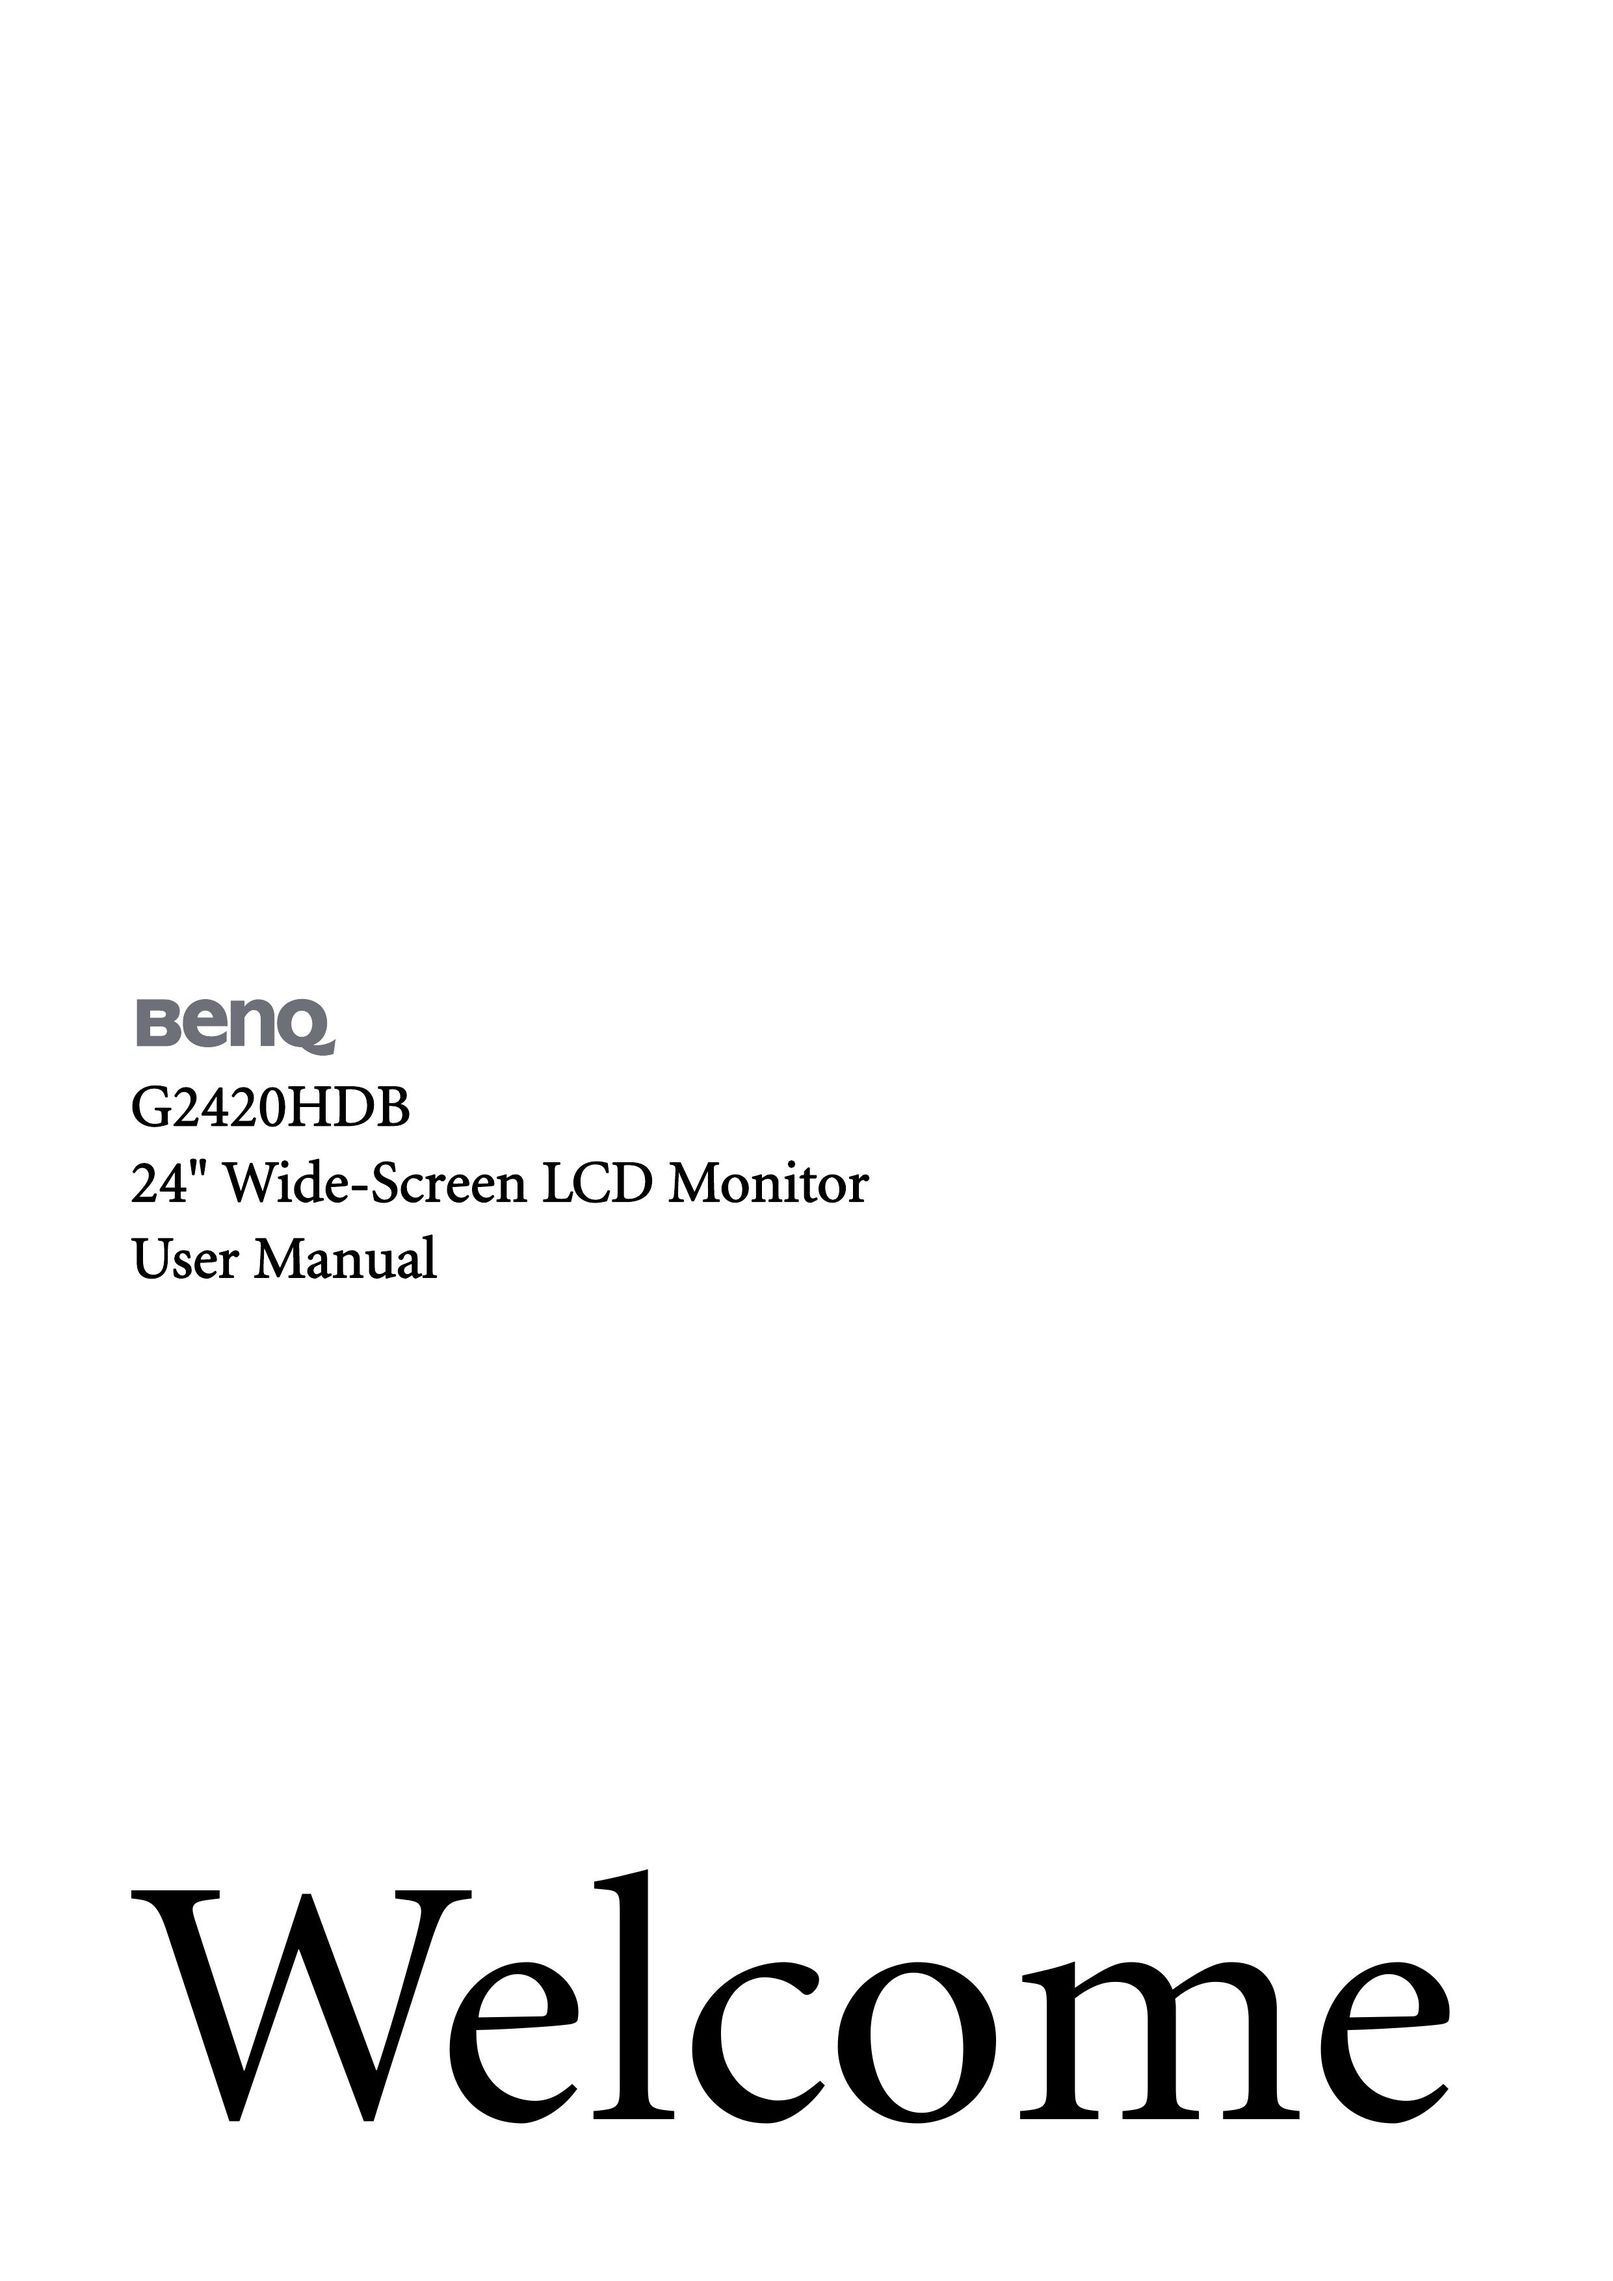 BenQ G2420HDB Computer Monitor User Manual